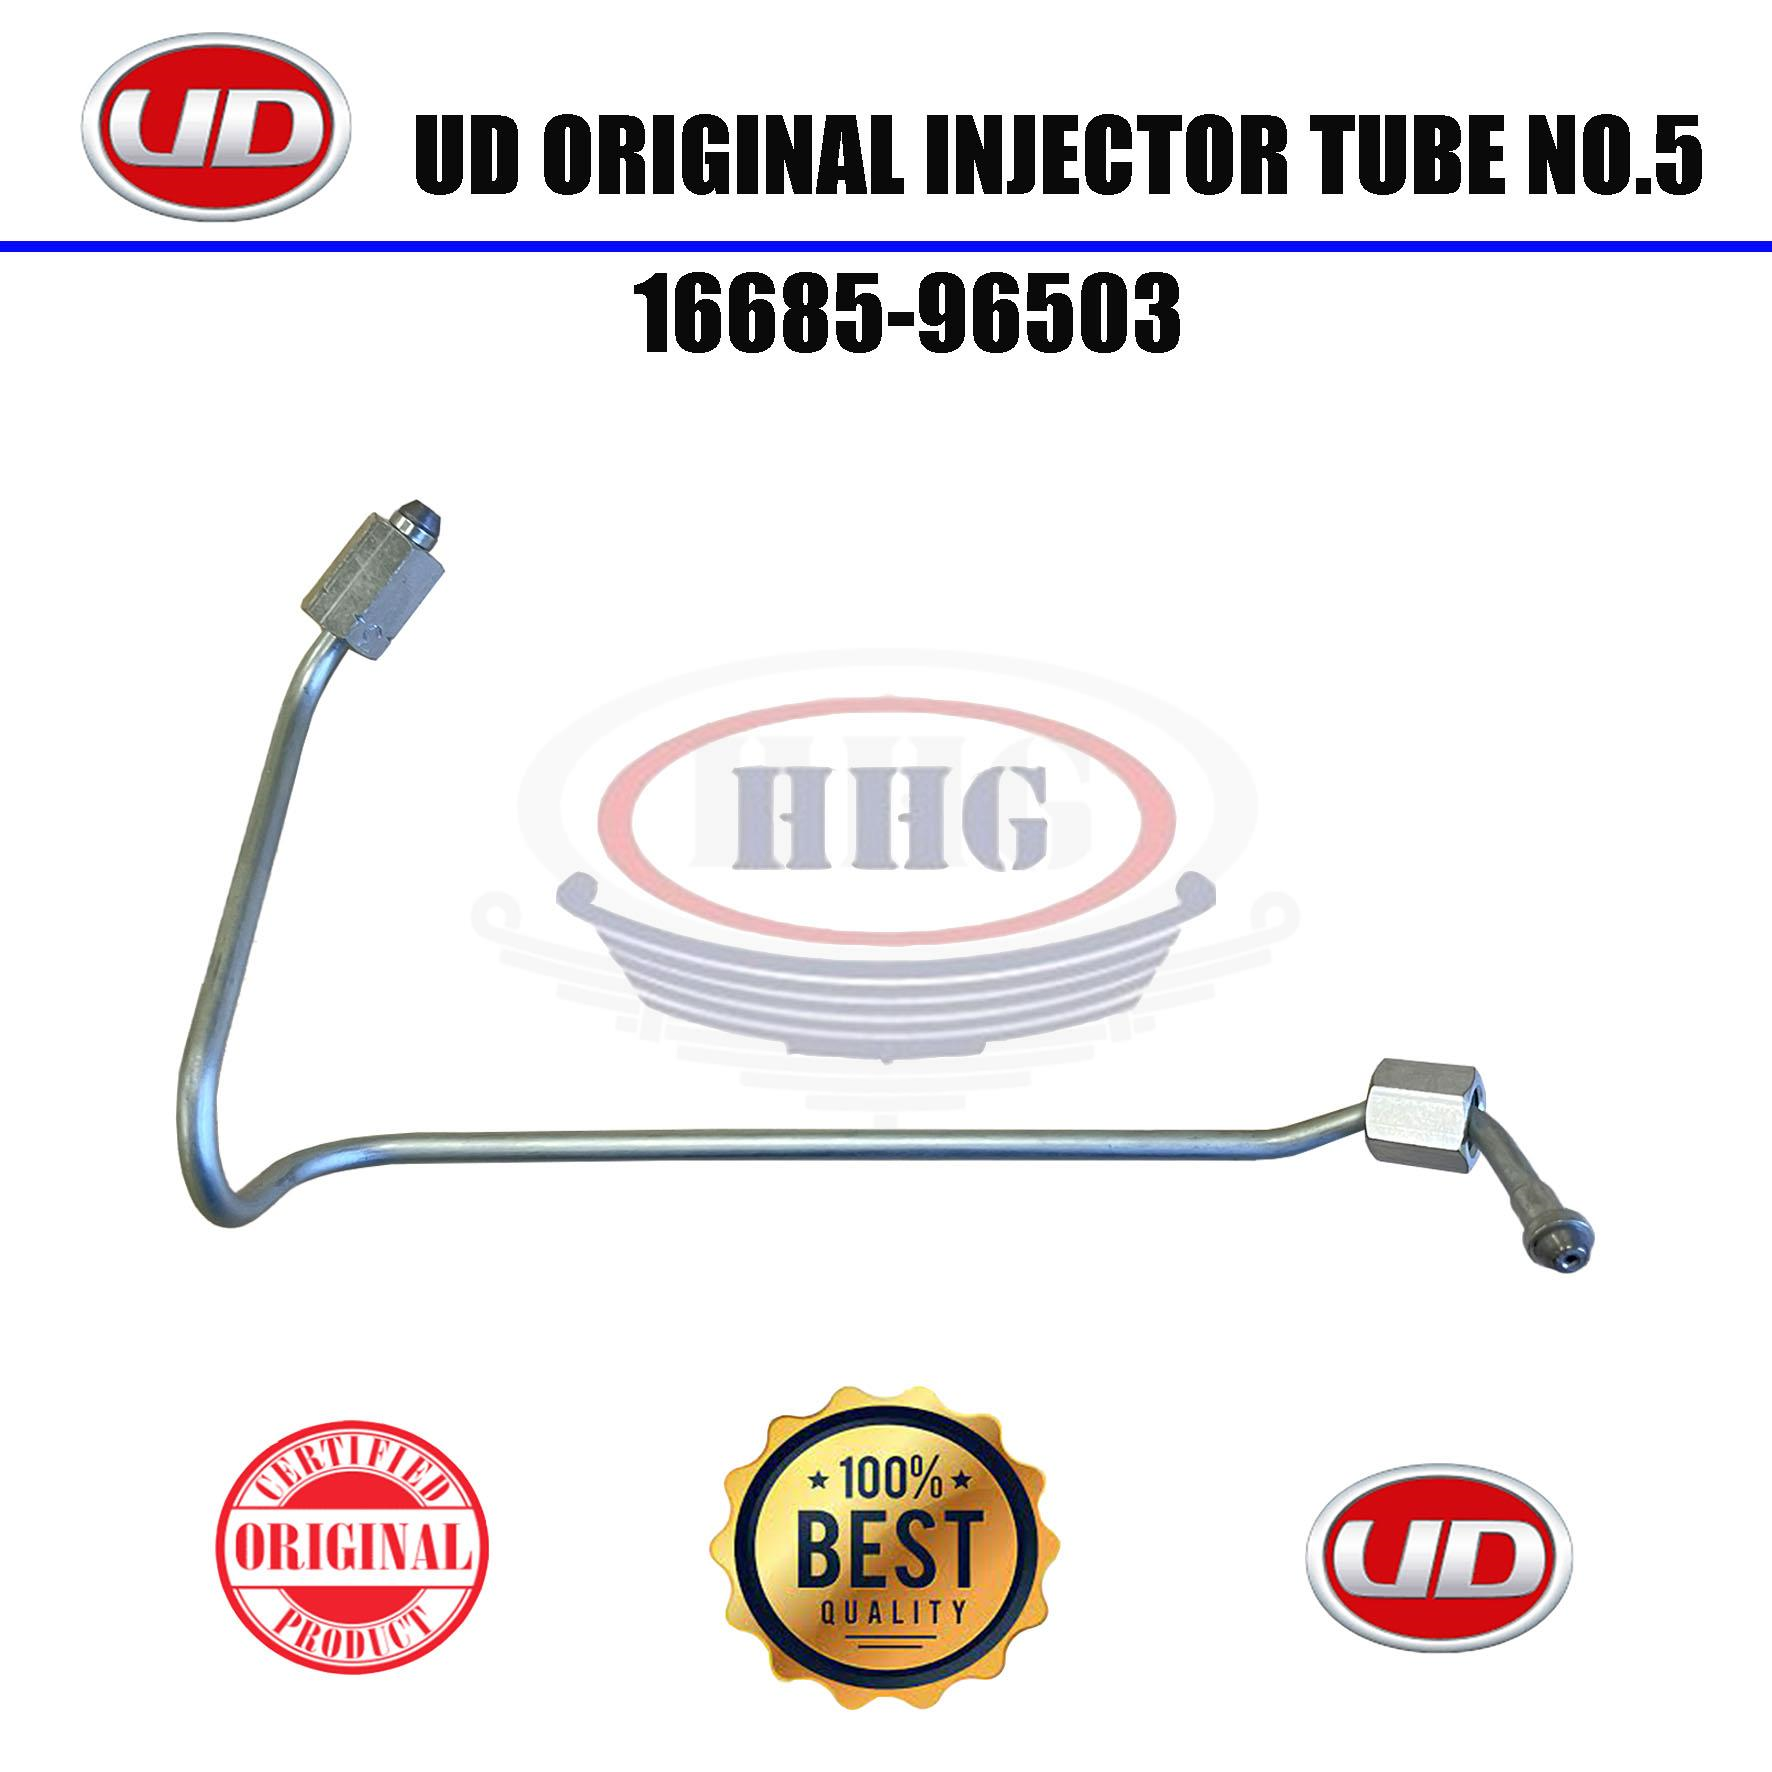 UD Original JA452 PF6T Injector Tube No.5 (16685-96503)